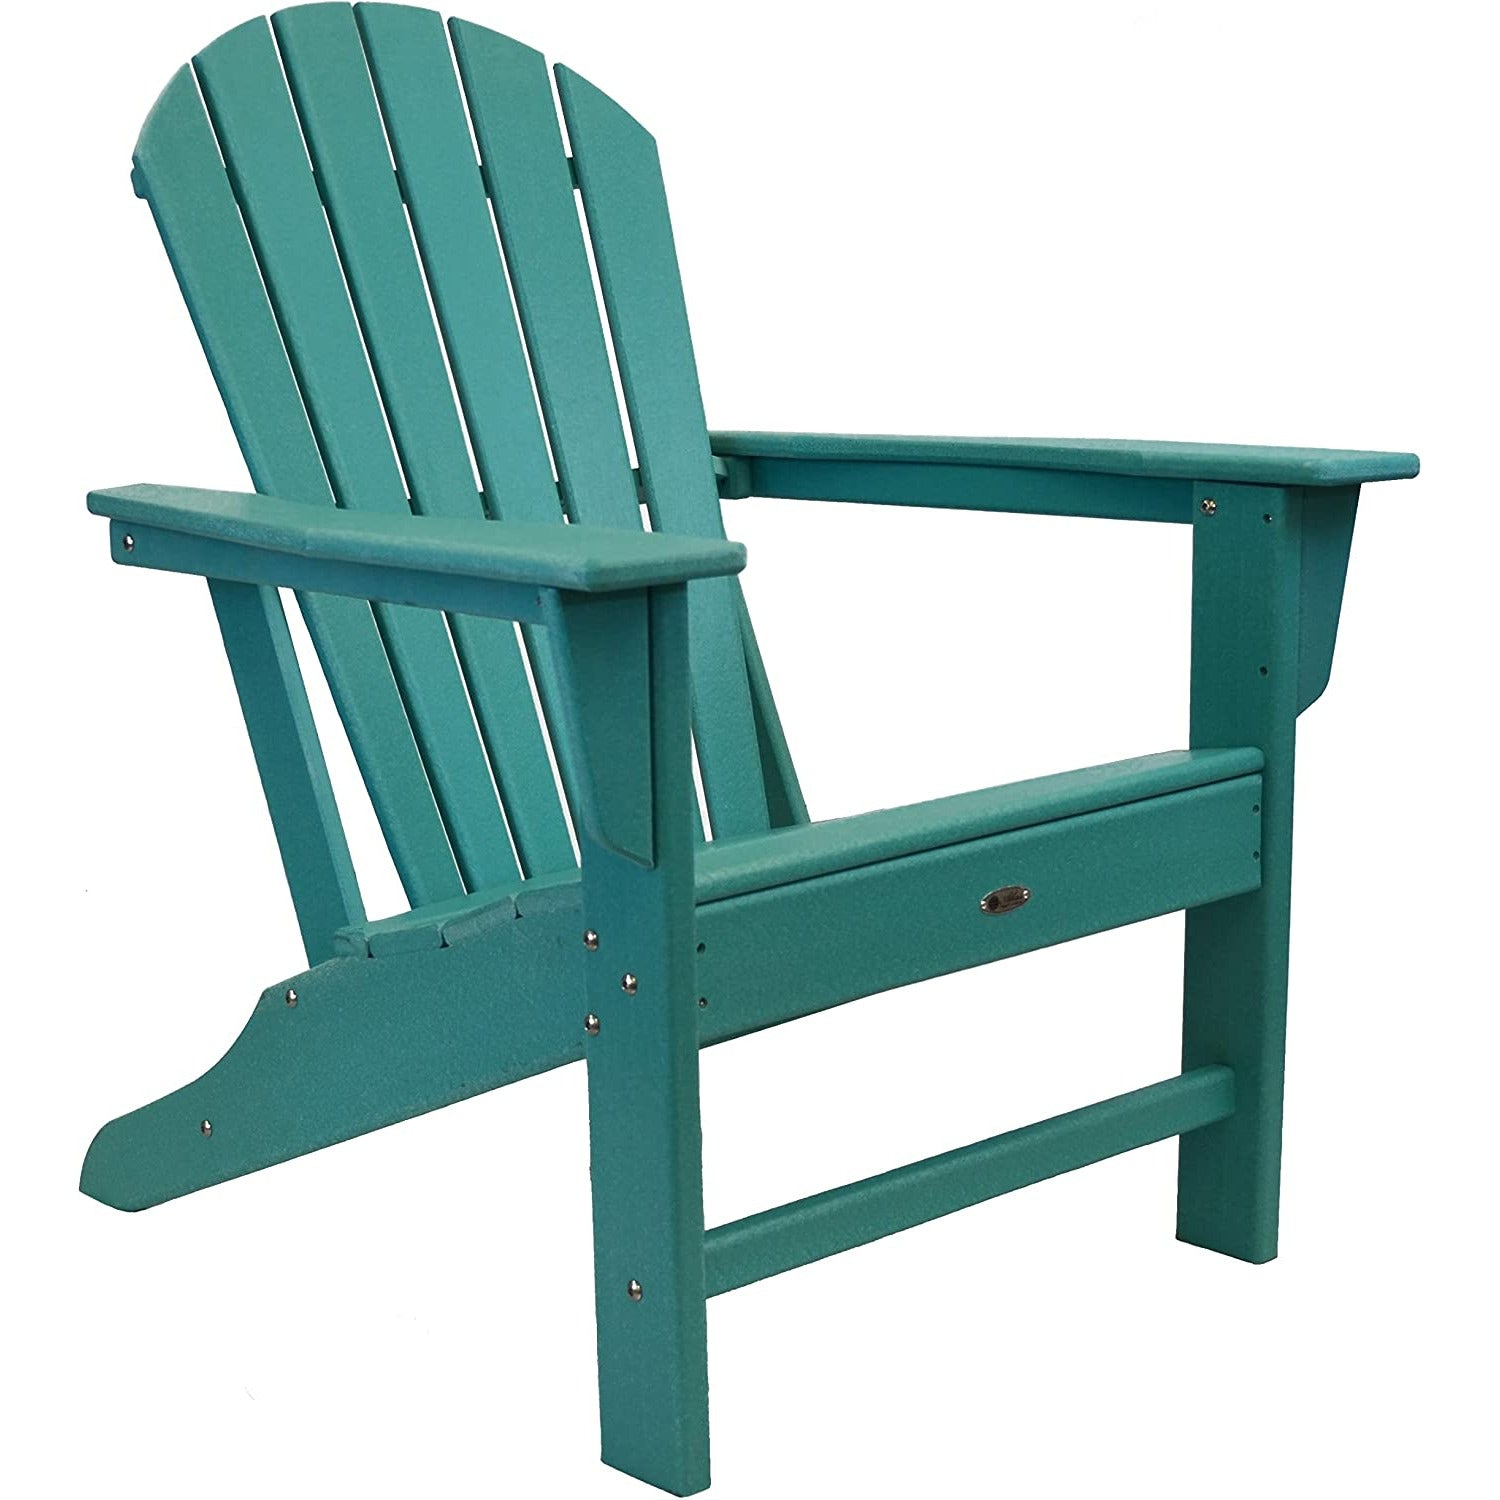 Atlas Patio Furniture Surf City Adirondack Chair IN STOCK